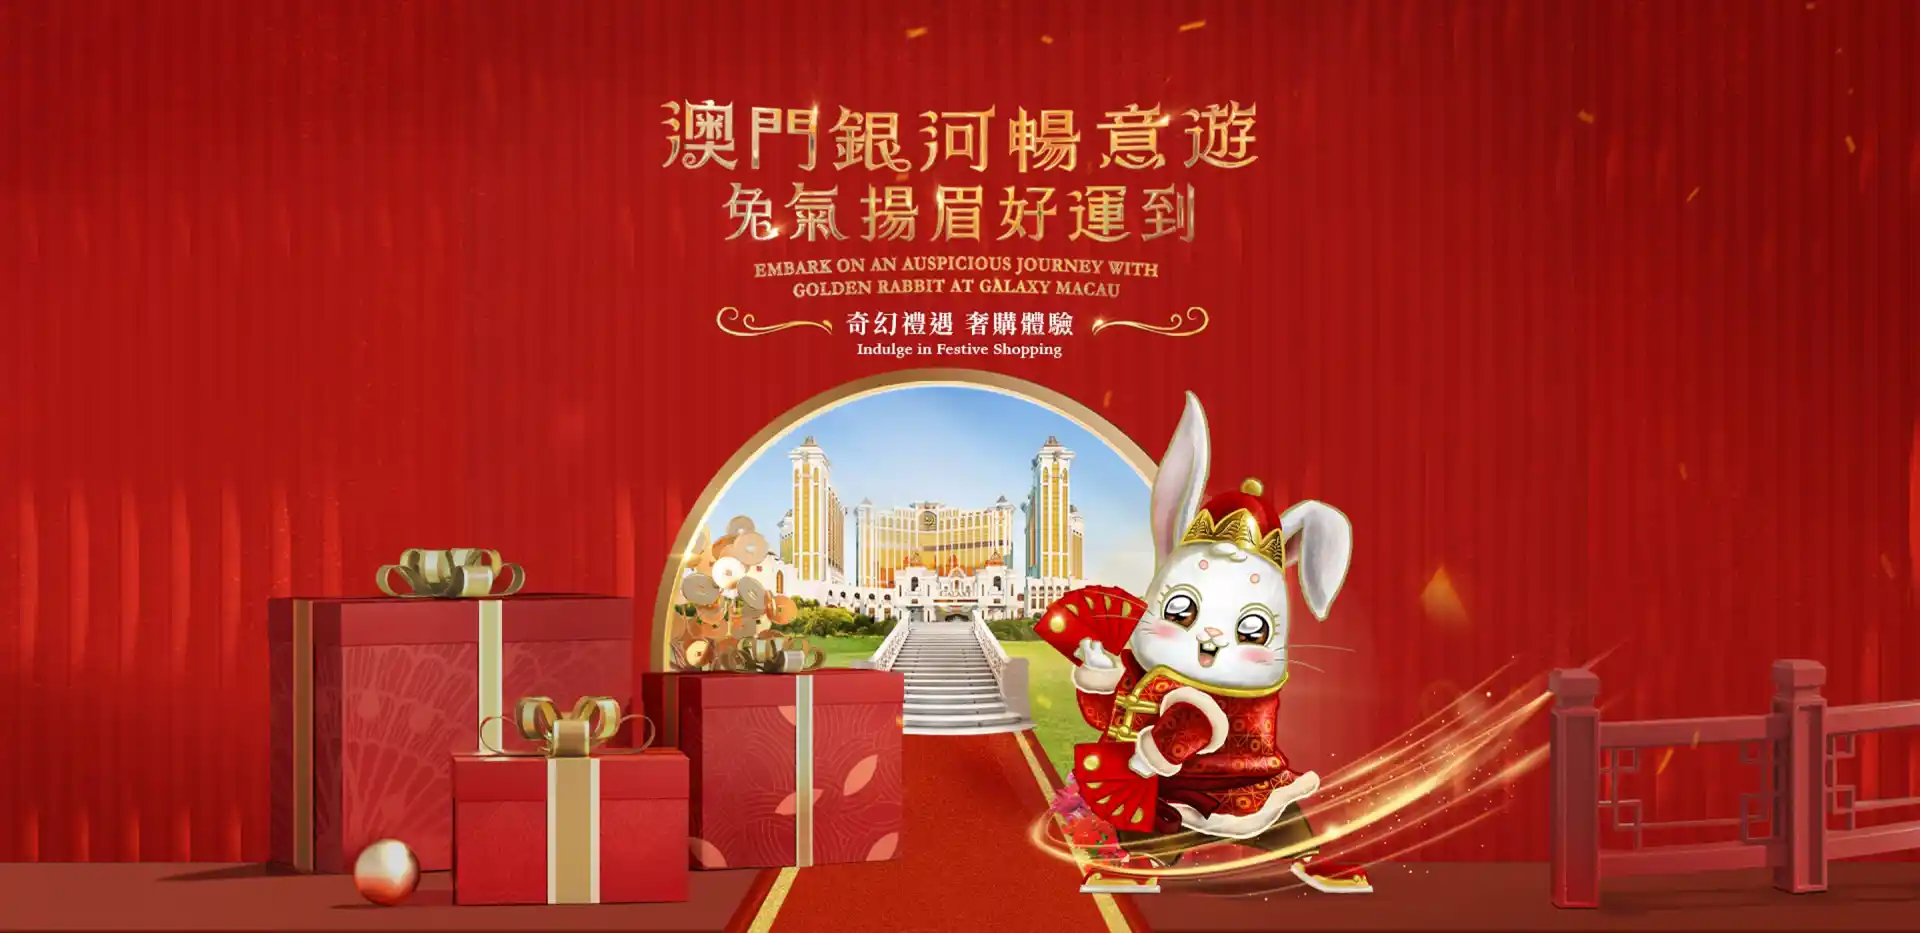 Embark on an Auspicious Journey with Golden Rabbit at Galaxy Macau